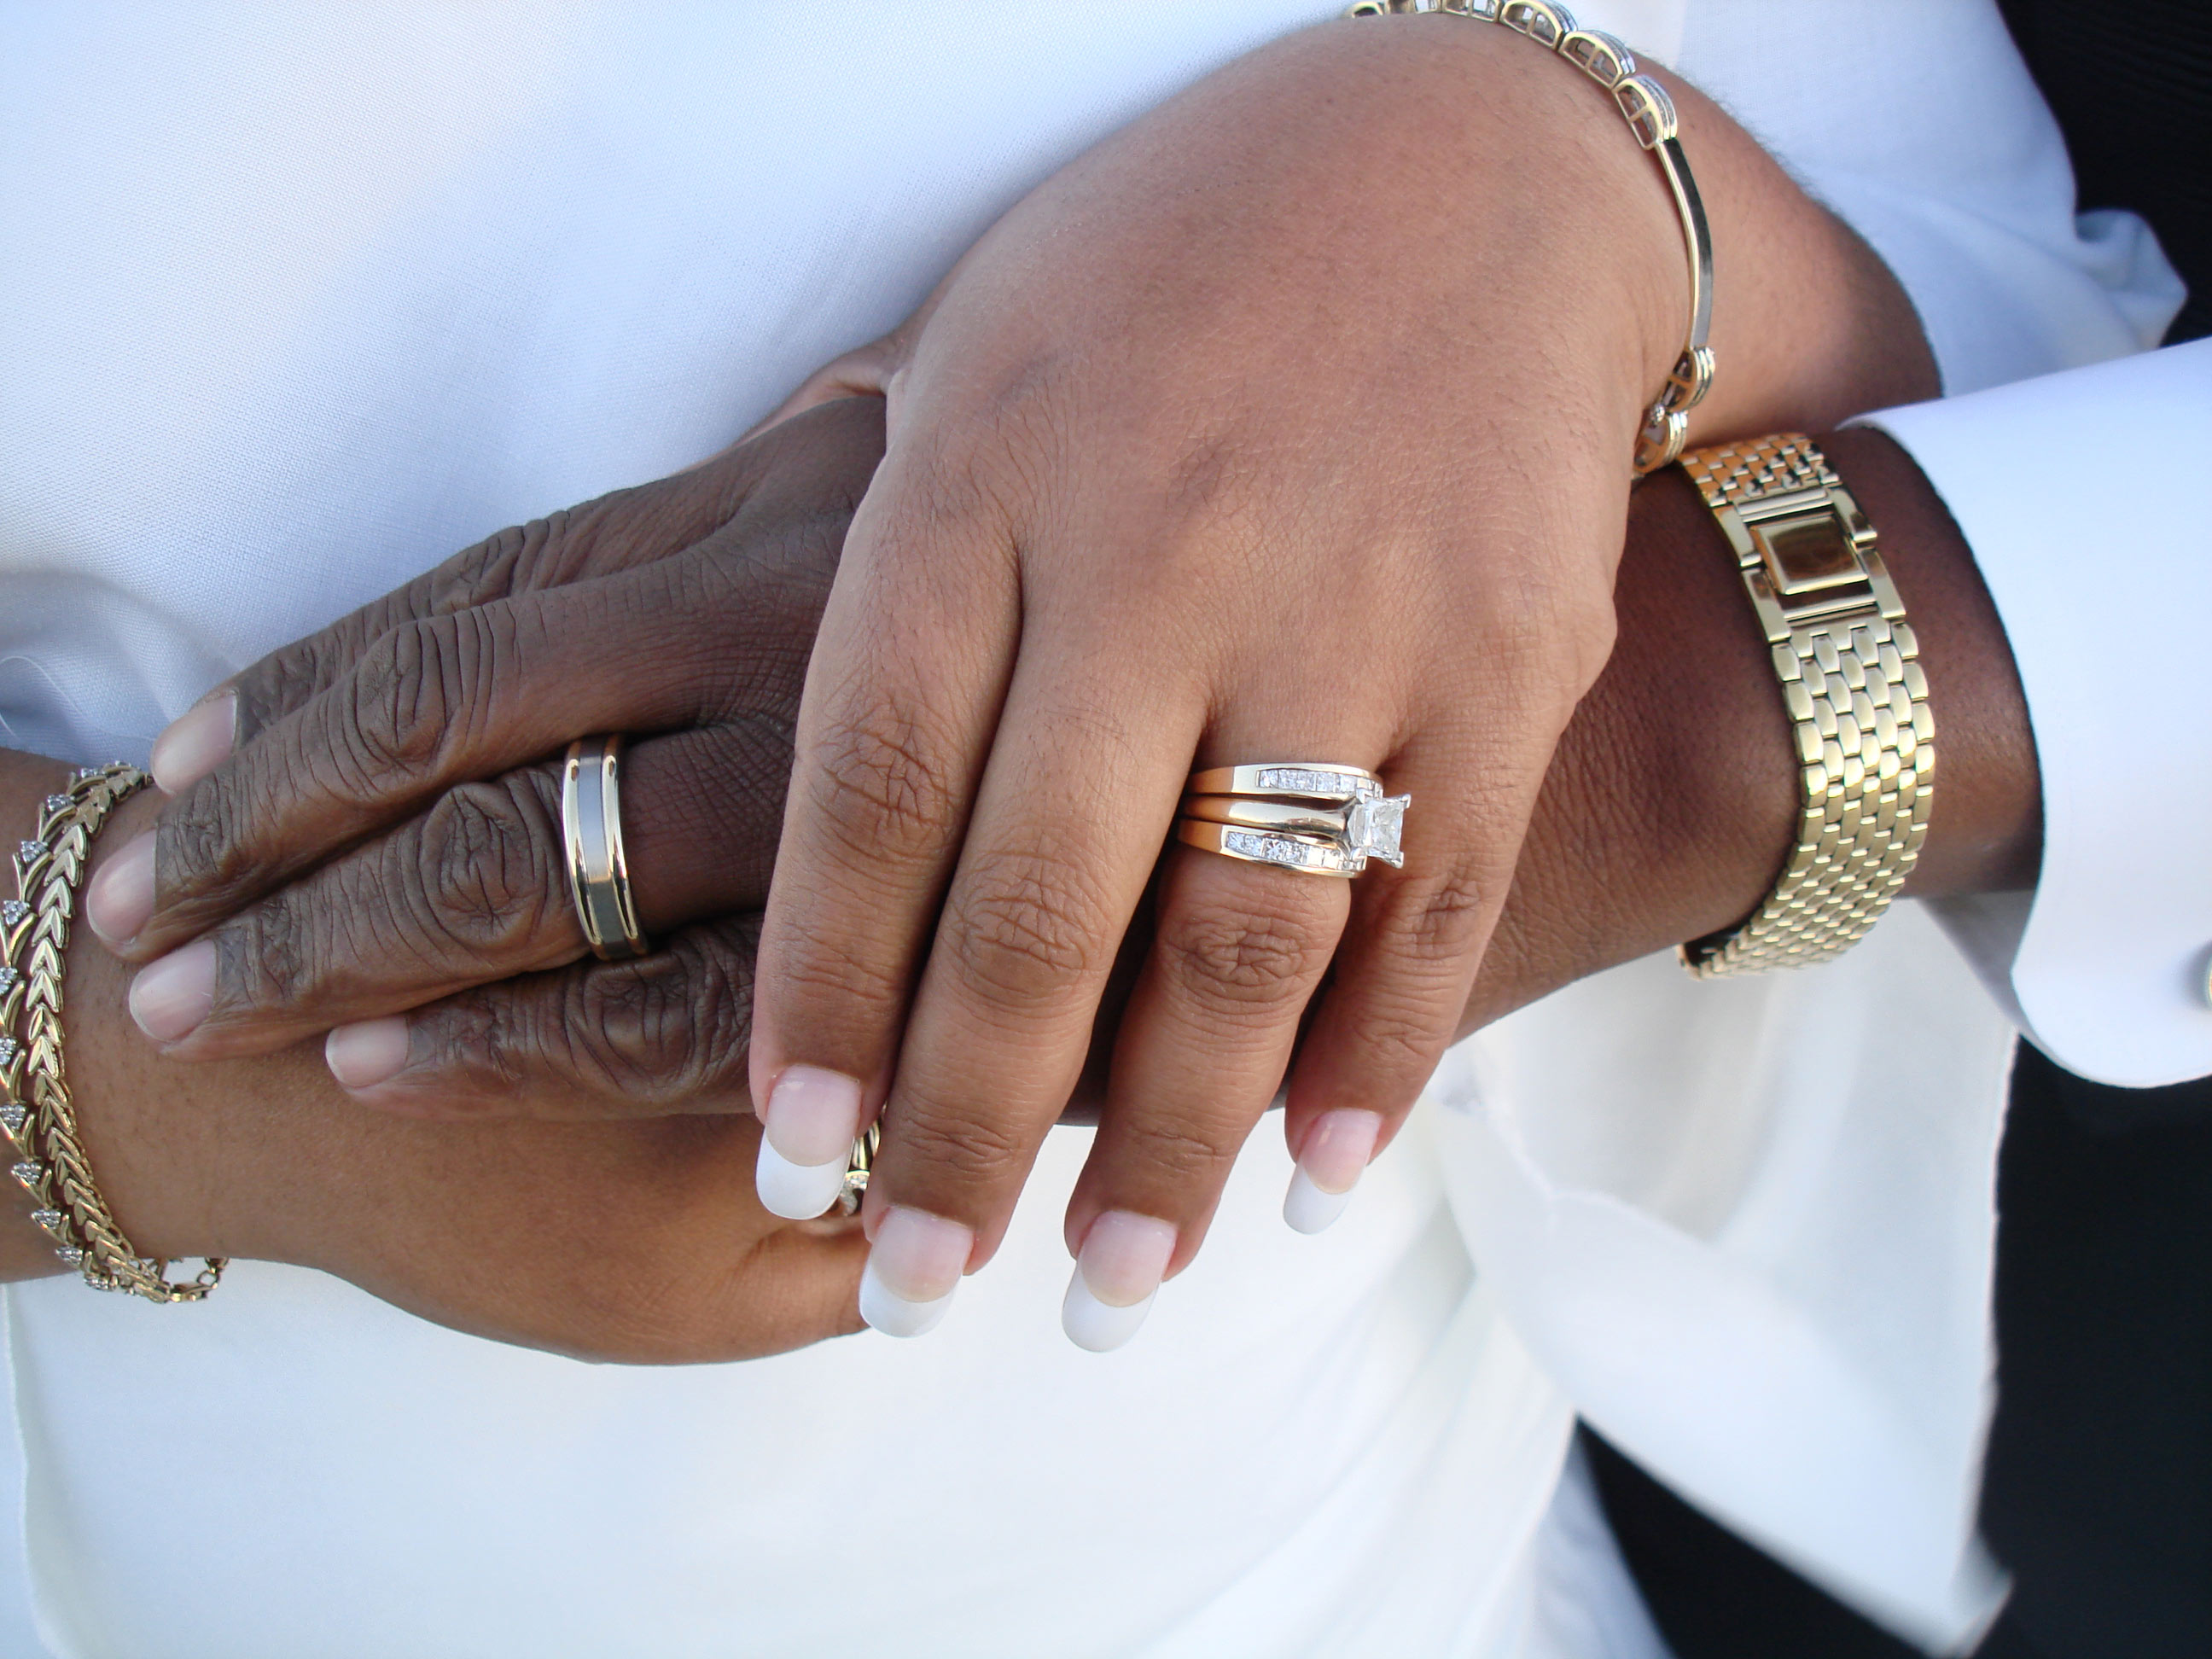 Замуж на какую руку кольцо. Свадебные кольца на руках. Брак с иностранцем. Мужские обручальные кольца на руке. Современные обручальные кольца на руке.